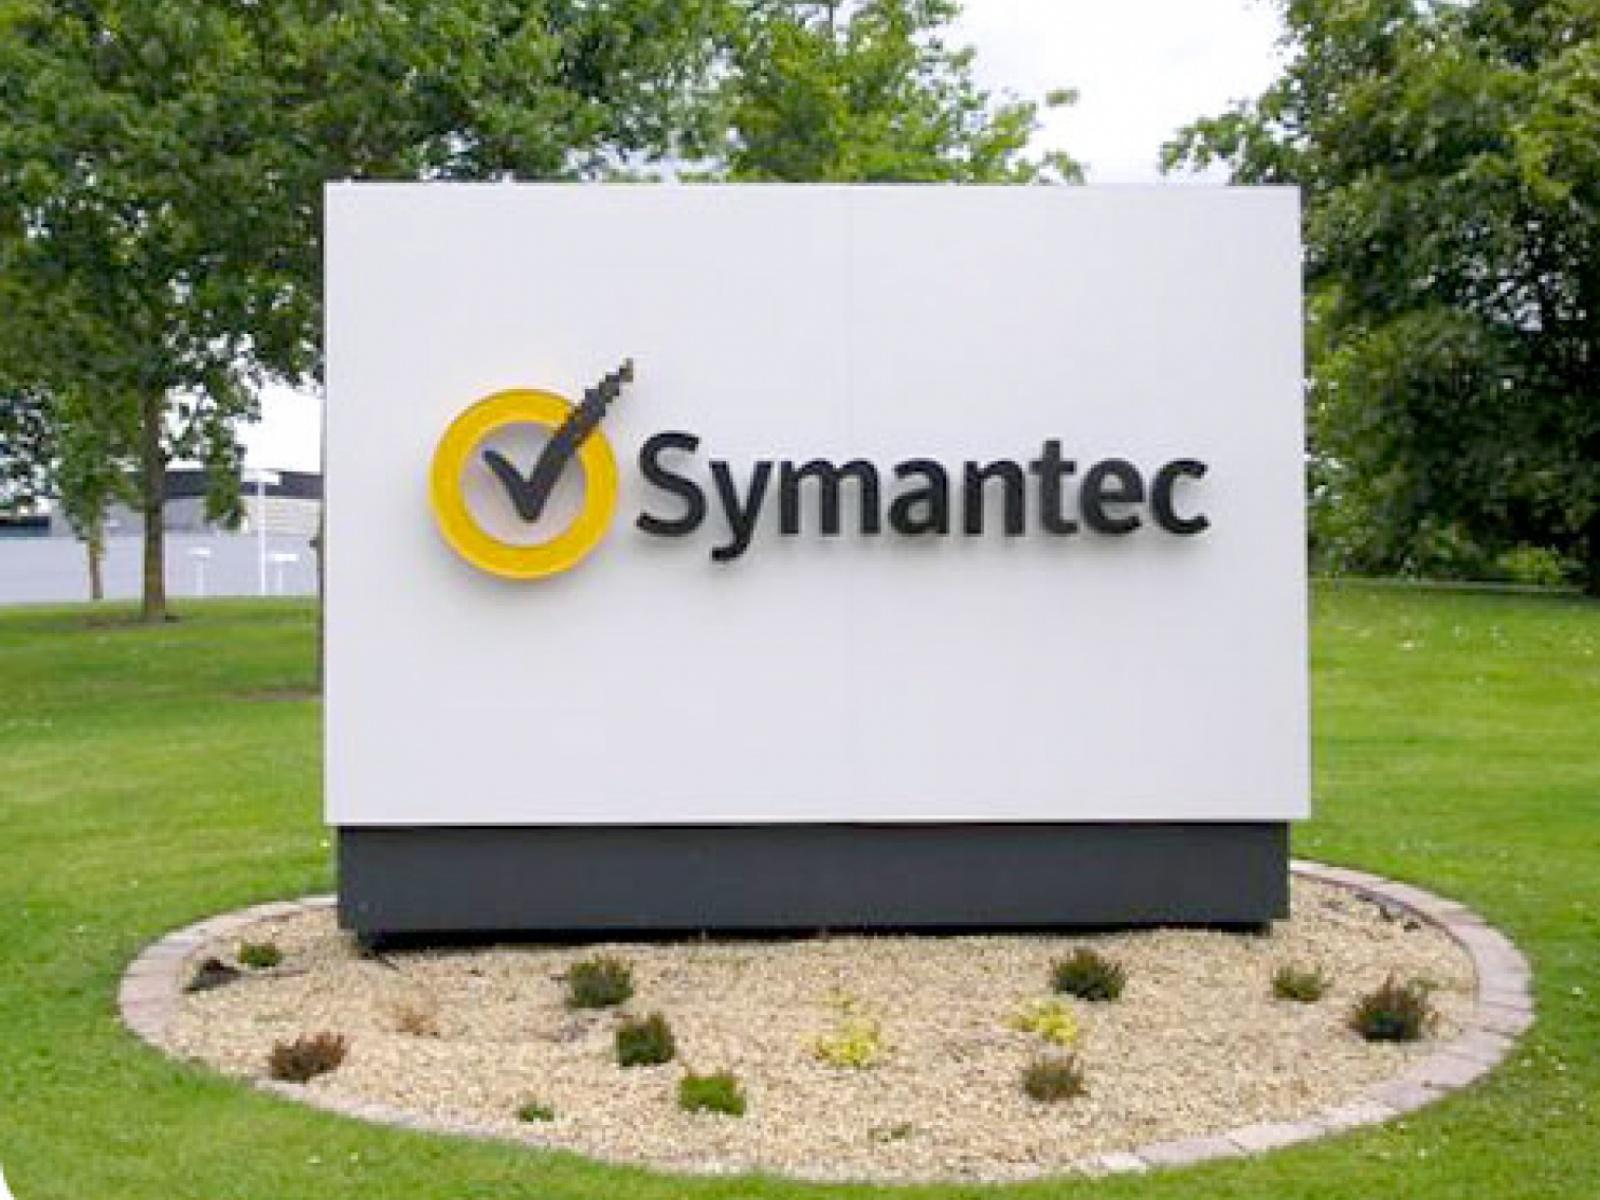 Symantec external signage